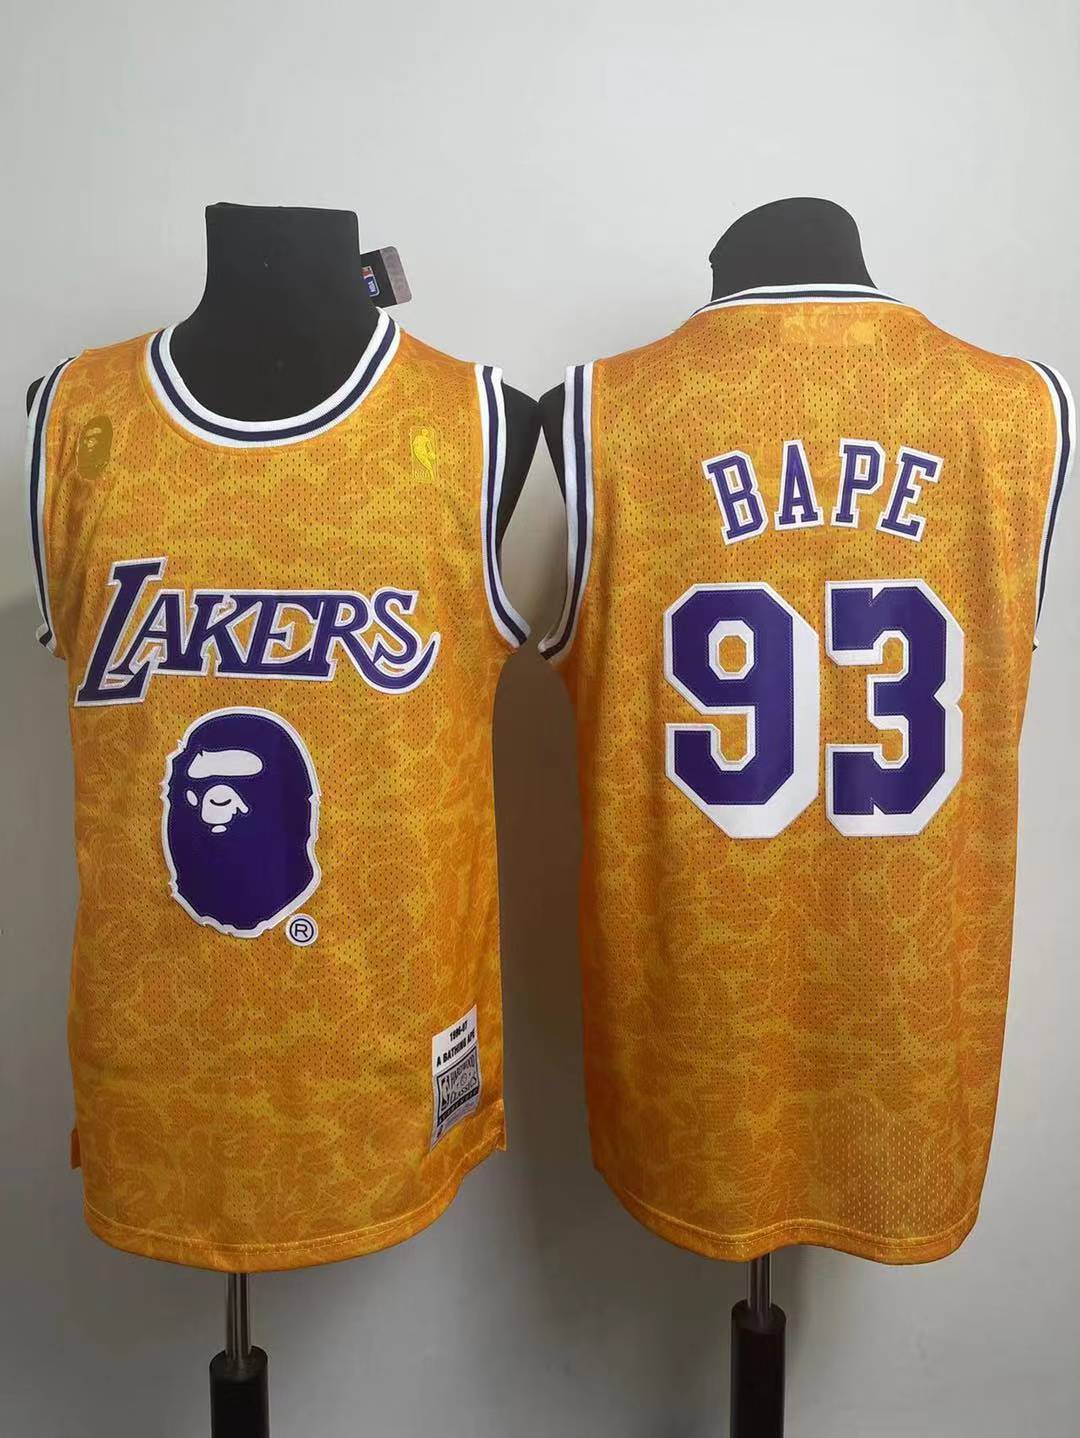 nba LAKERE BULLS CELTICS WARRIORS #93 BAPE basketball jersey